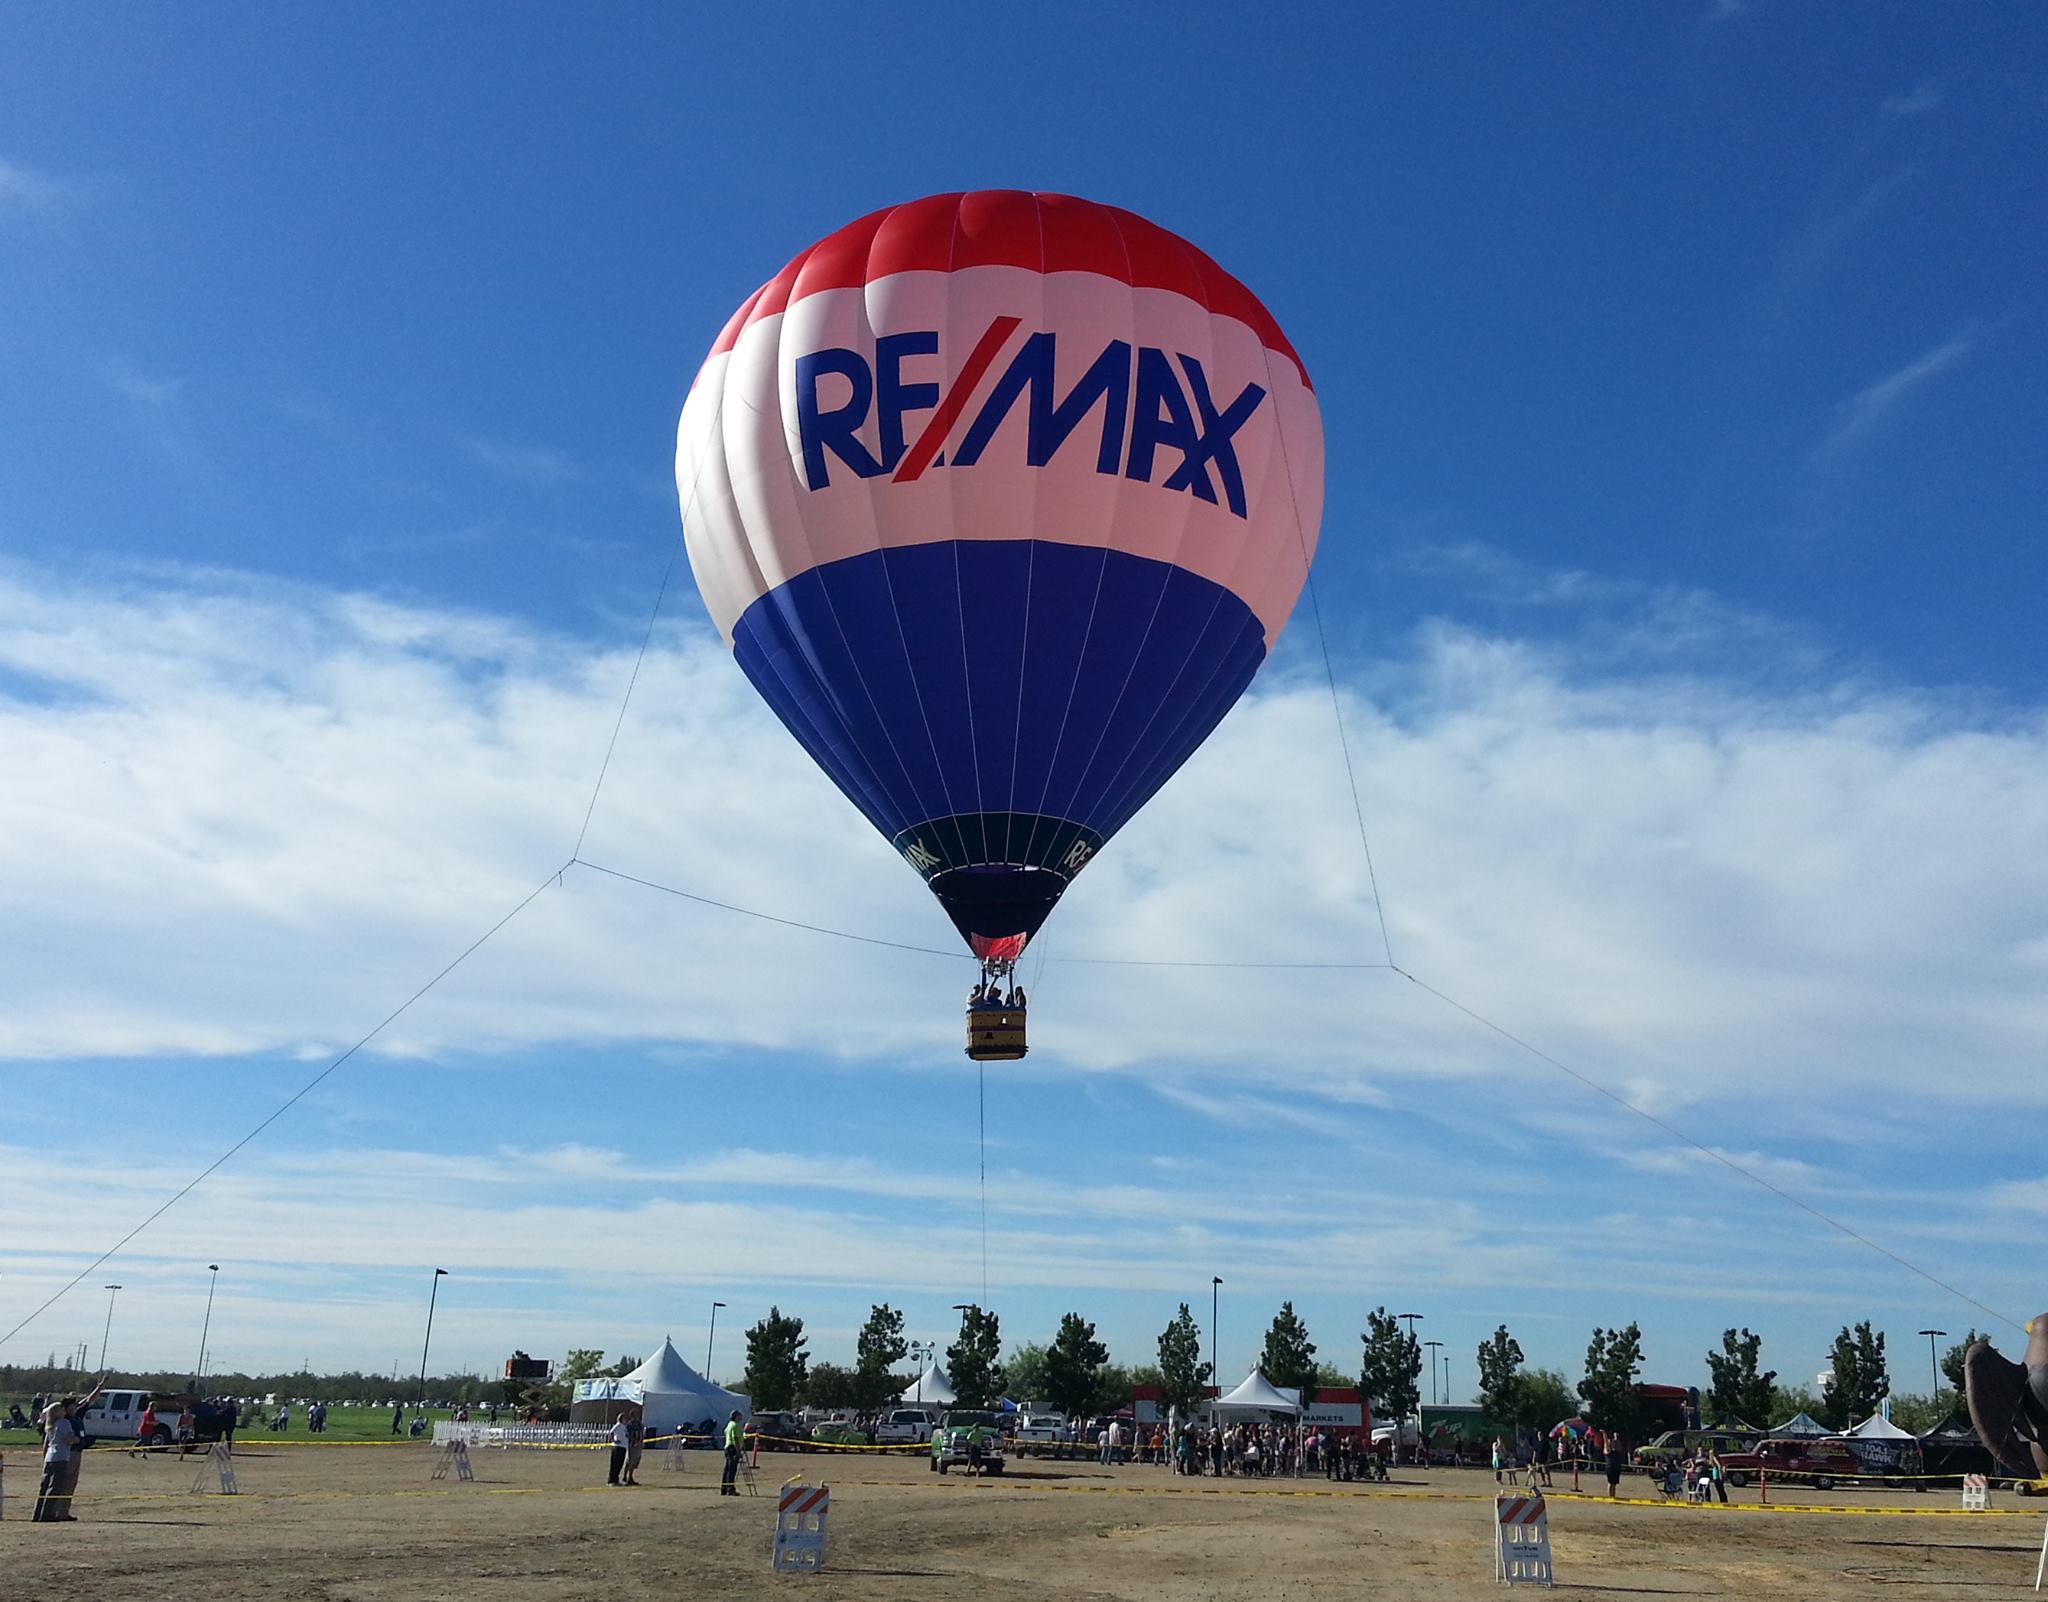 RE/MAX Balloon Tethered Rides